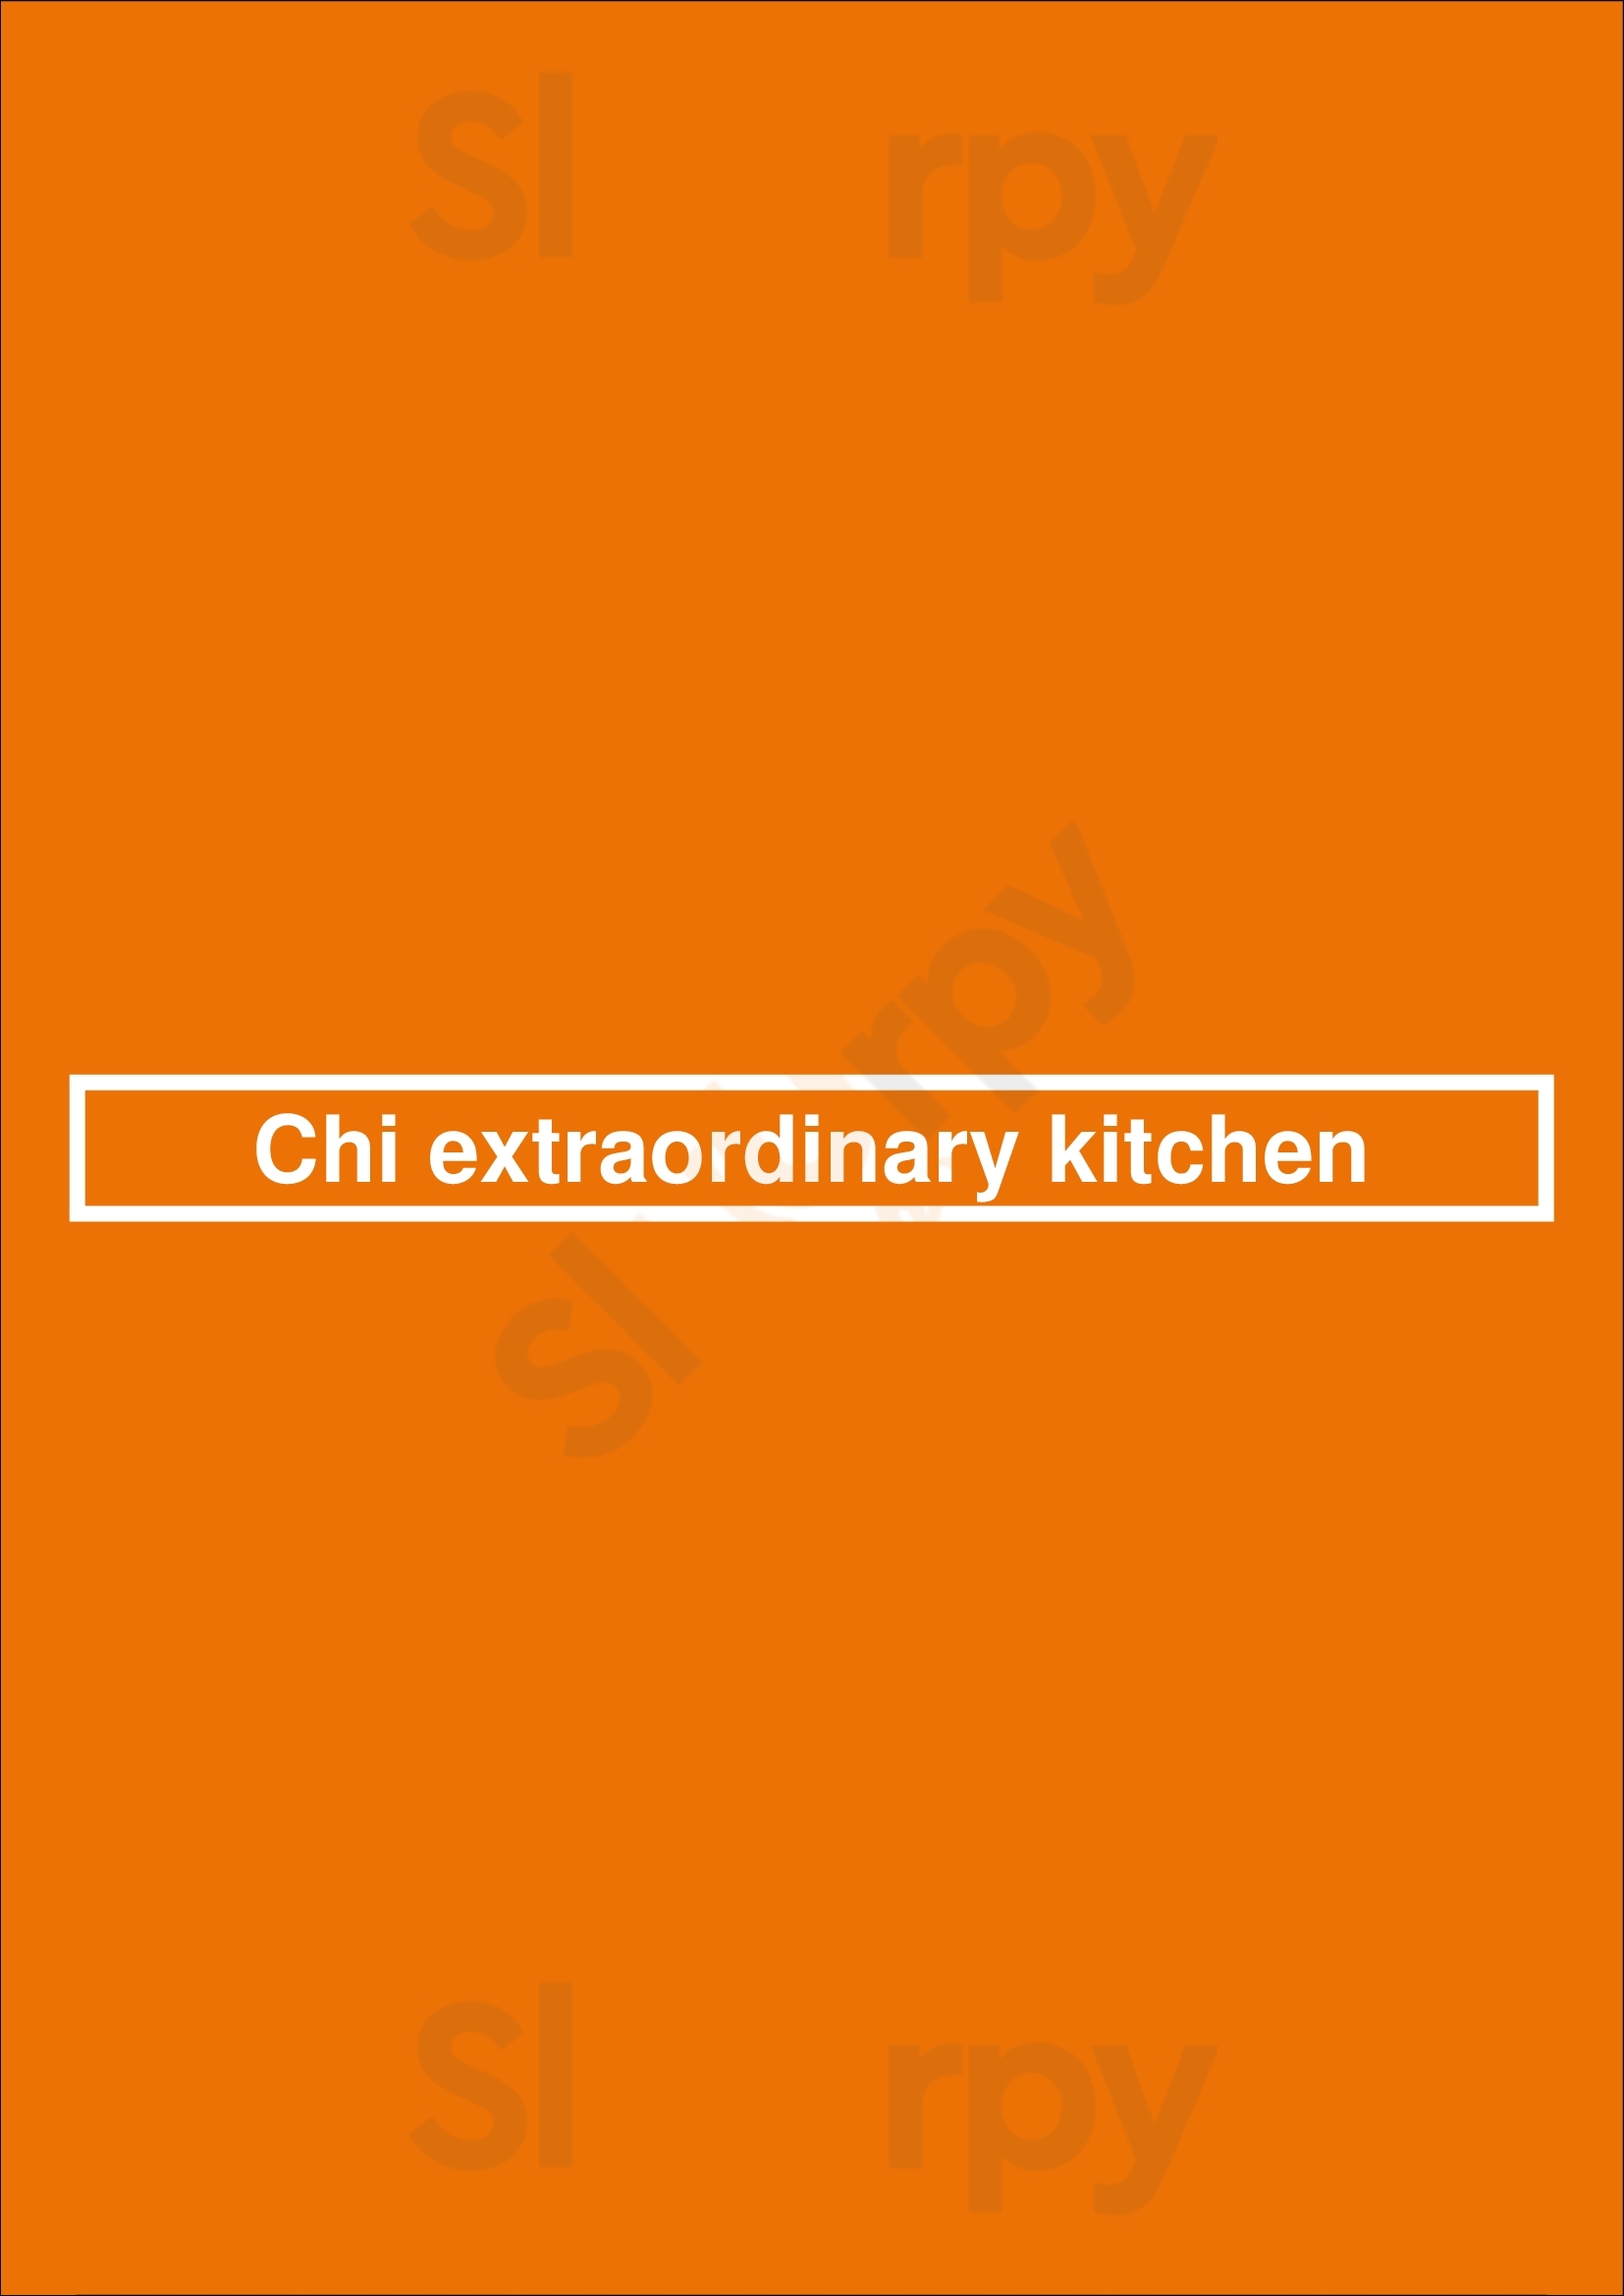 Chi Extraordinary Kitchen San Diego Menu - 1